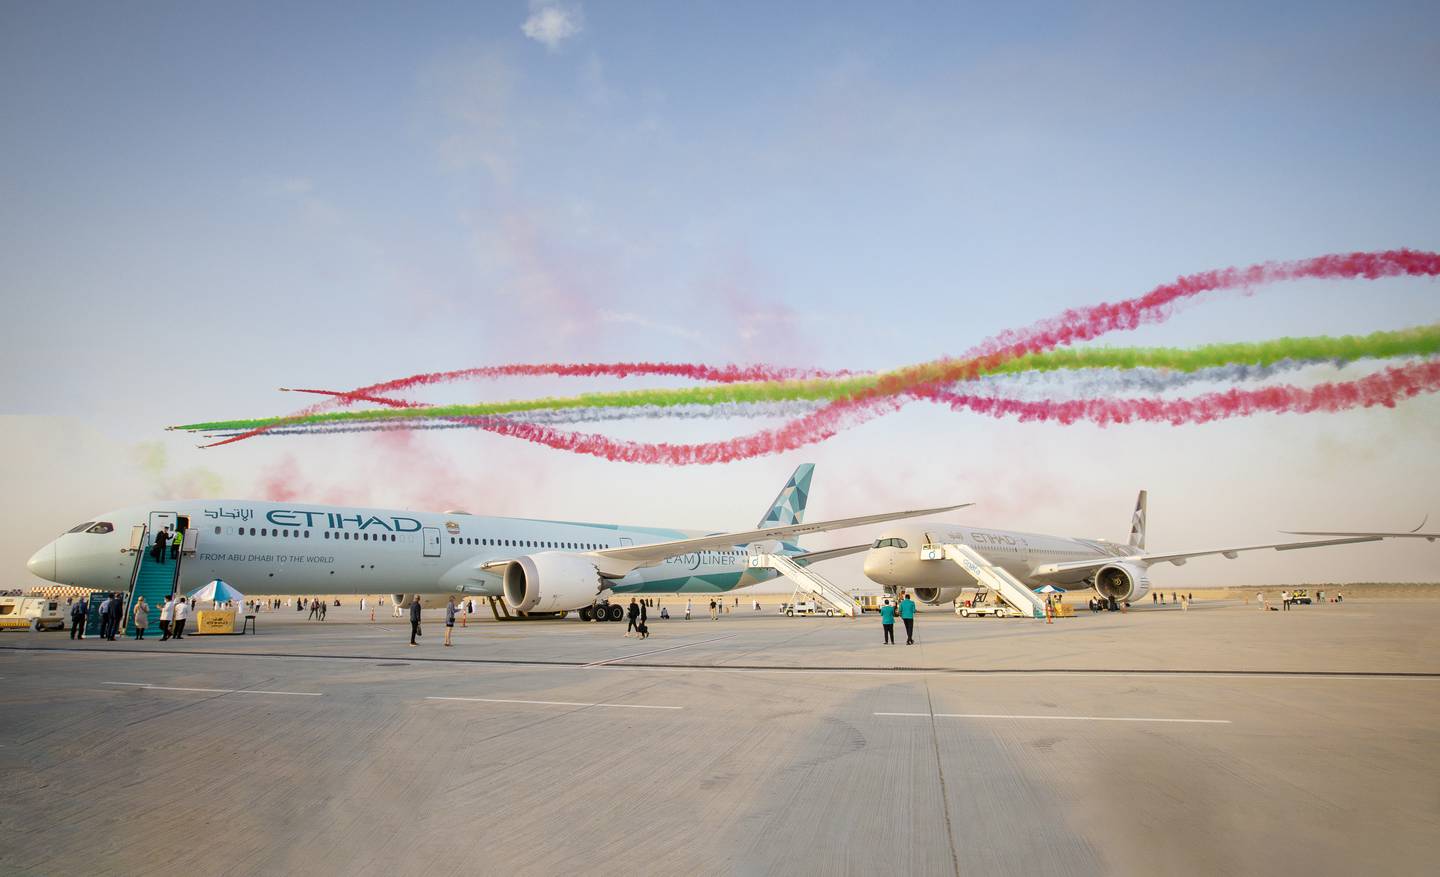 Etihad Airways aircraft at the Dubai Airshow 2021. Photo: Etihad